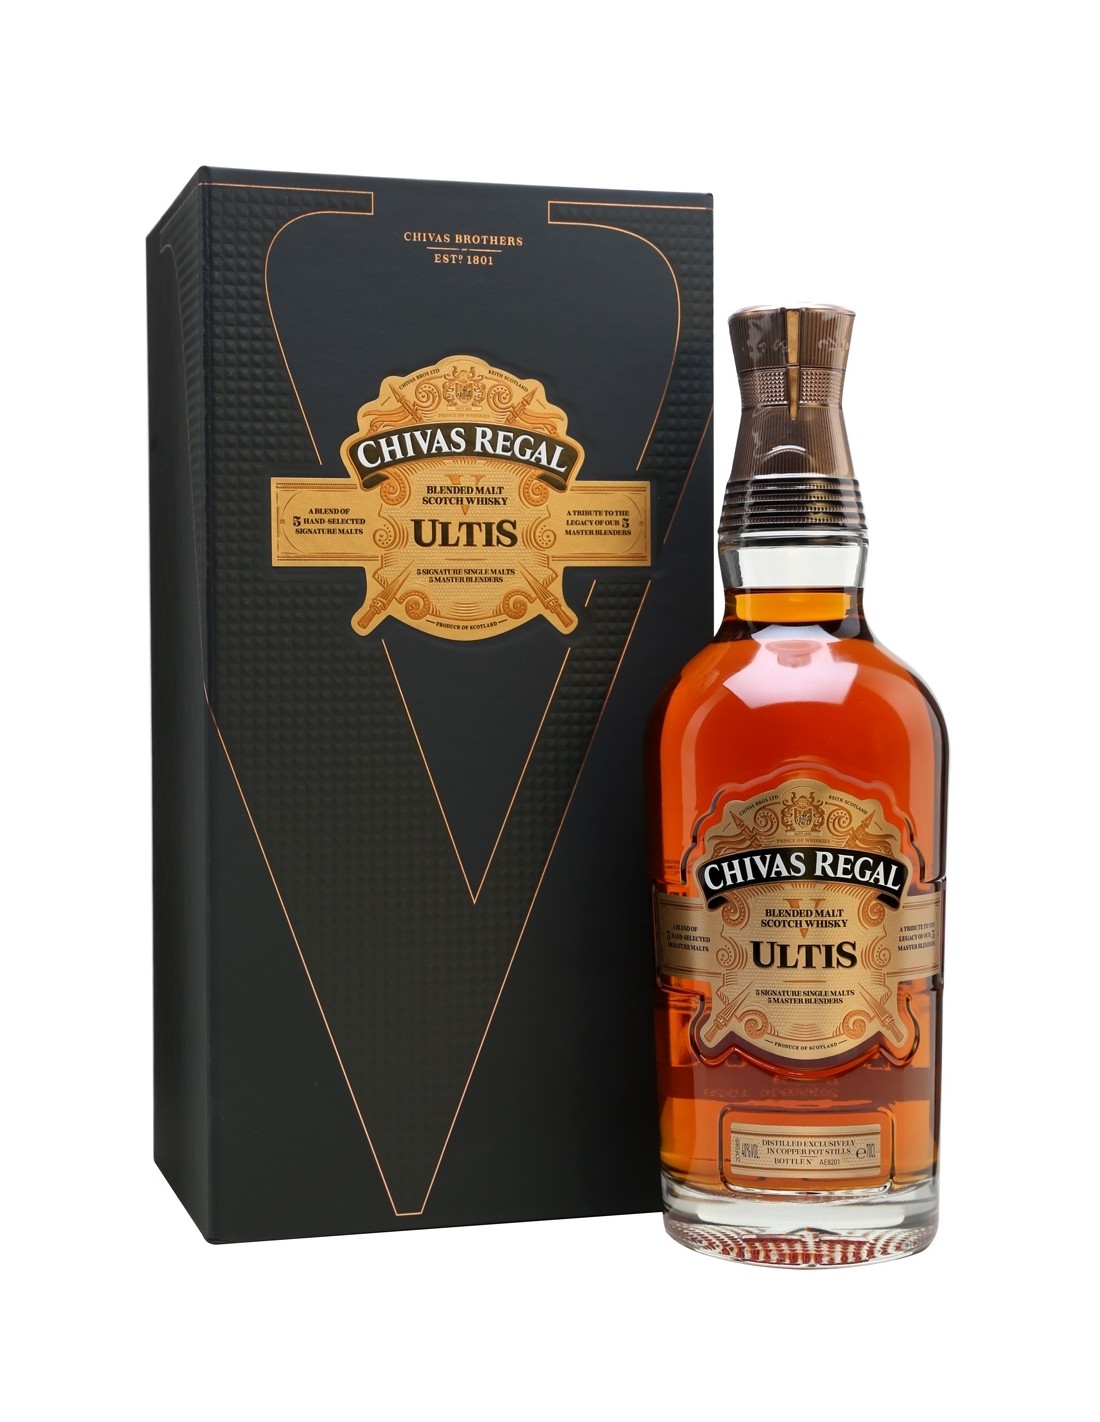 Whisky Chivas Regal Ultis, 40% alc., 0.7L, Scotia